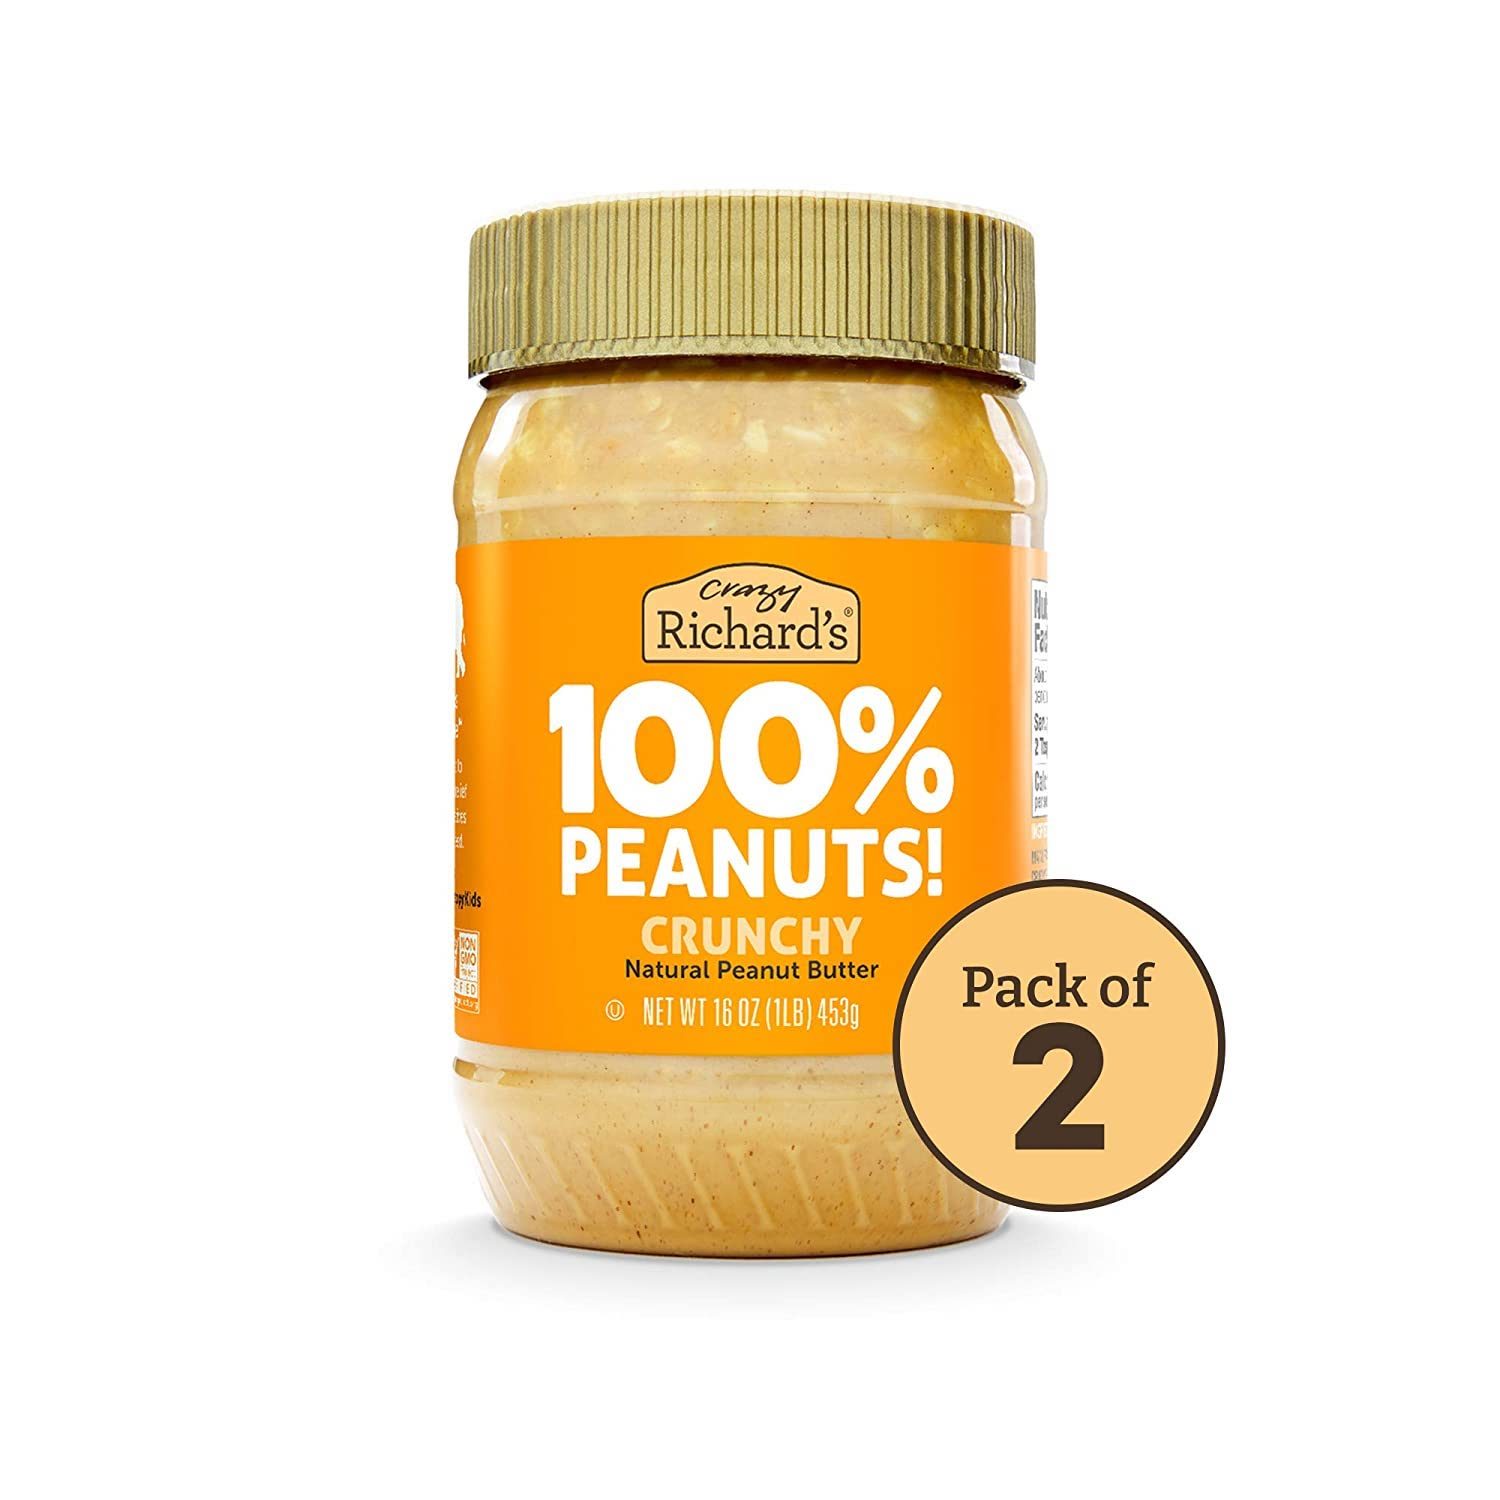 5 Best Peanut Butter Nov 21 Bestreviews